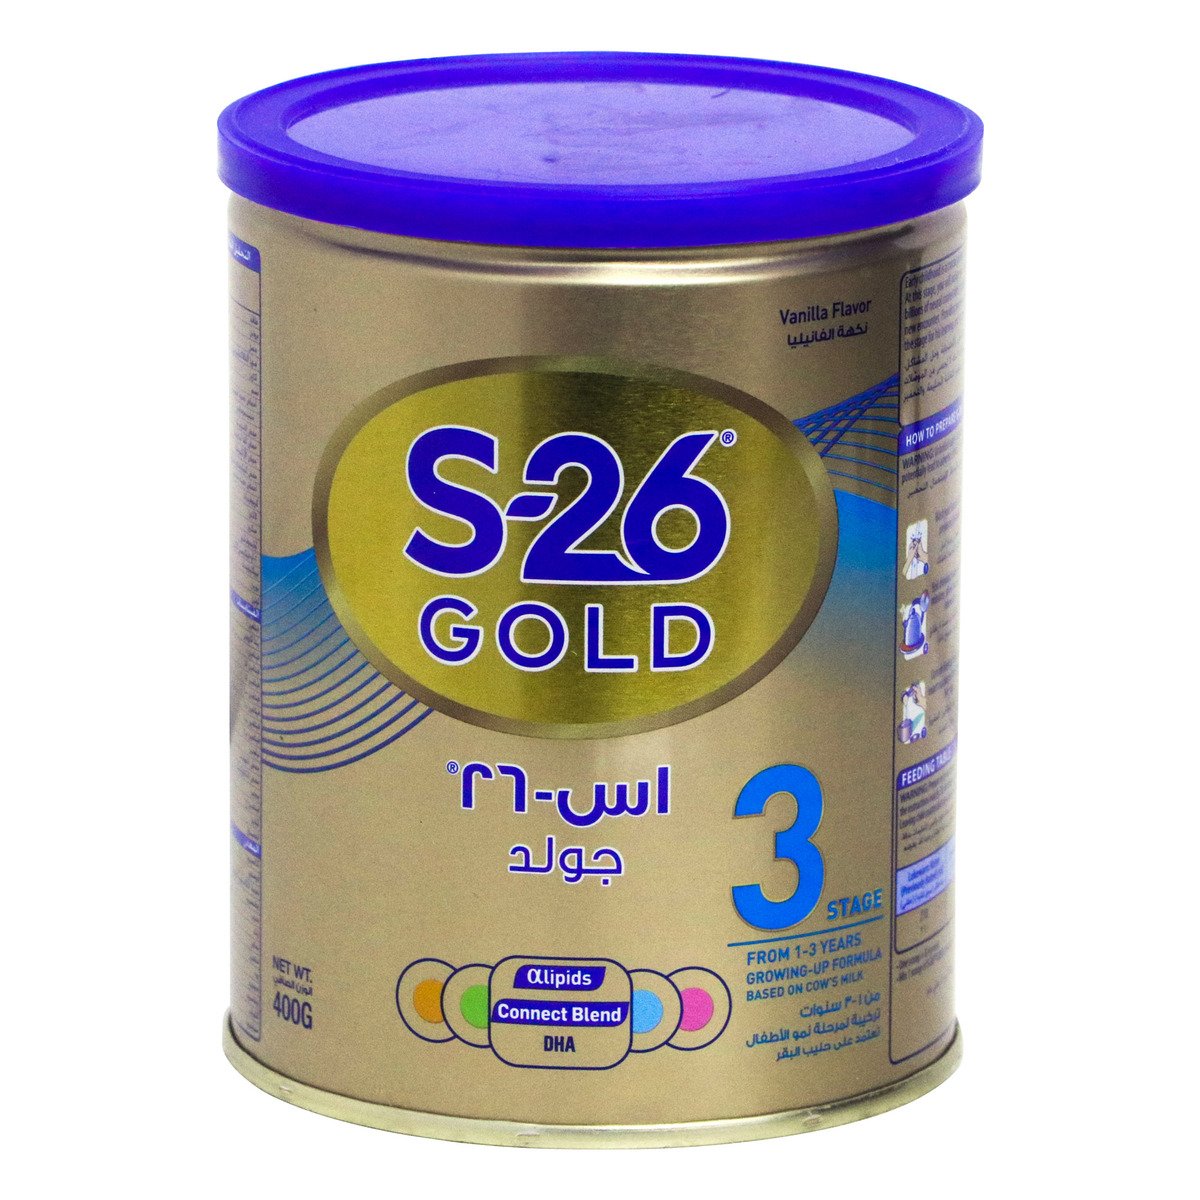 Buy S26 Gold 3 Stage from 1-3 Years Milk Powder Vanilla Flavor 400g Online at Best Price | Milk powders for growth | Lulu KSA in Saudi Arabia